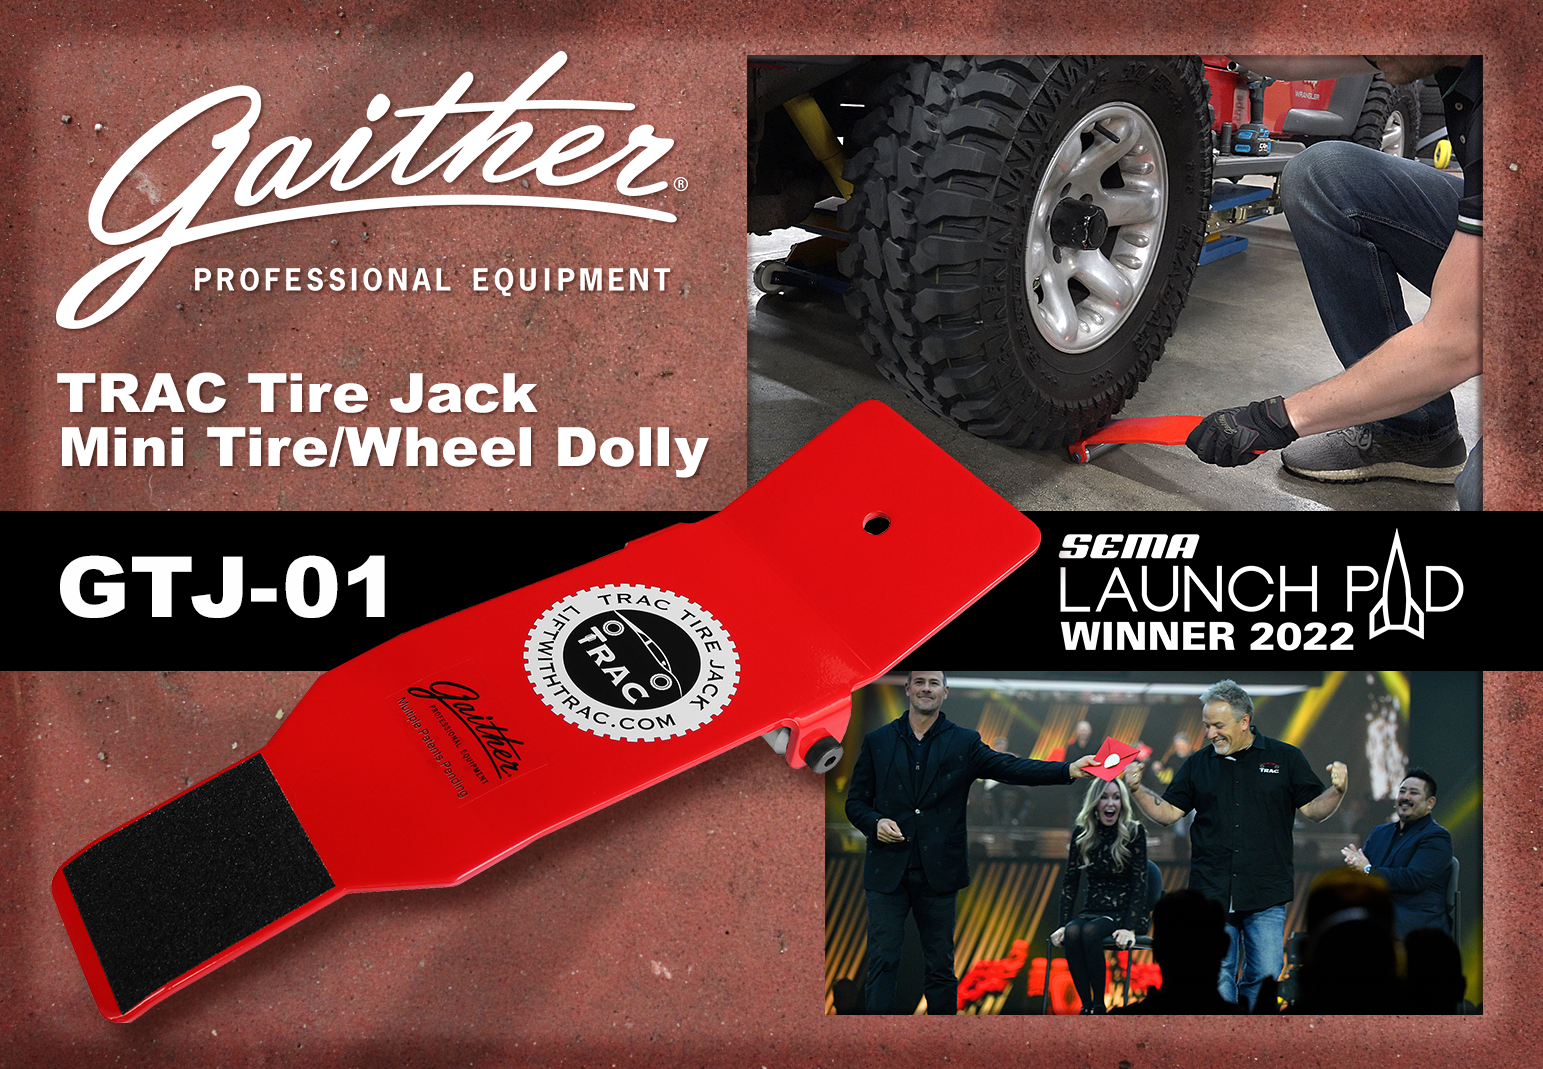 Gaither TRAC Tire Jack Mini Tire/Wheel Dolly